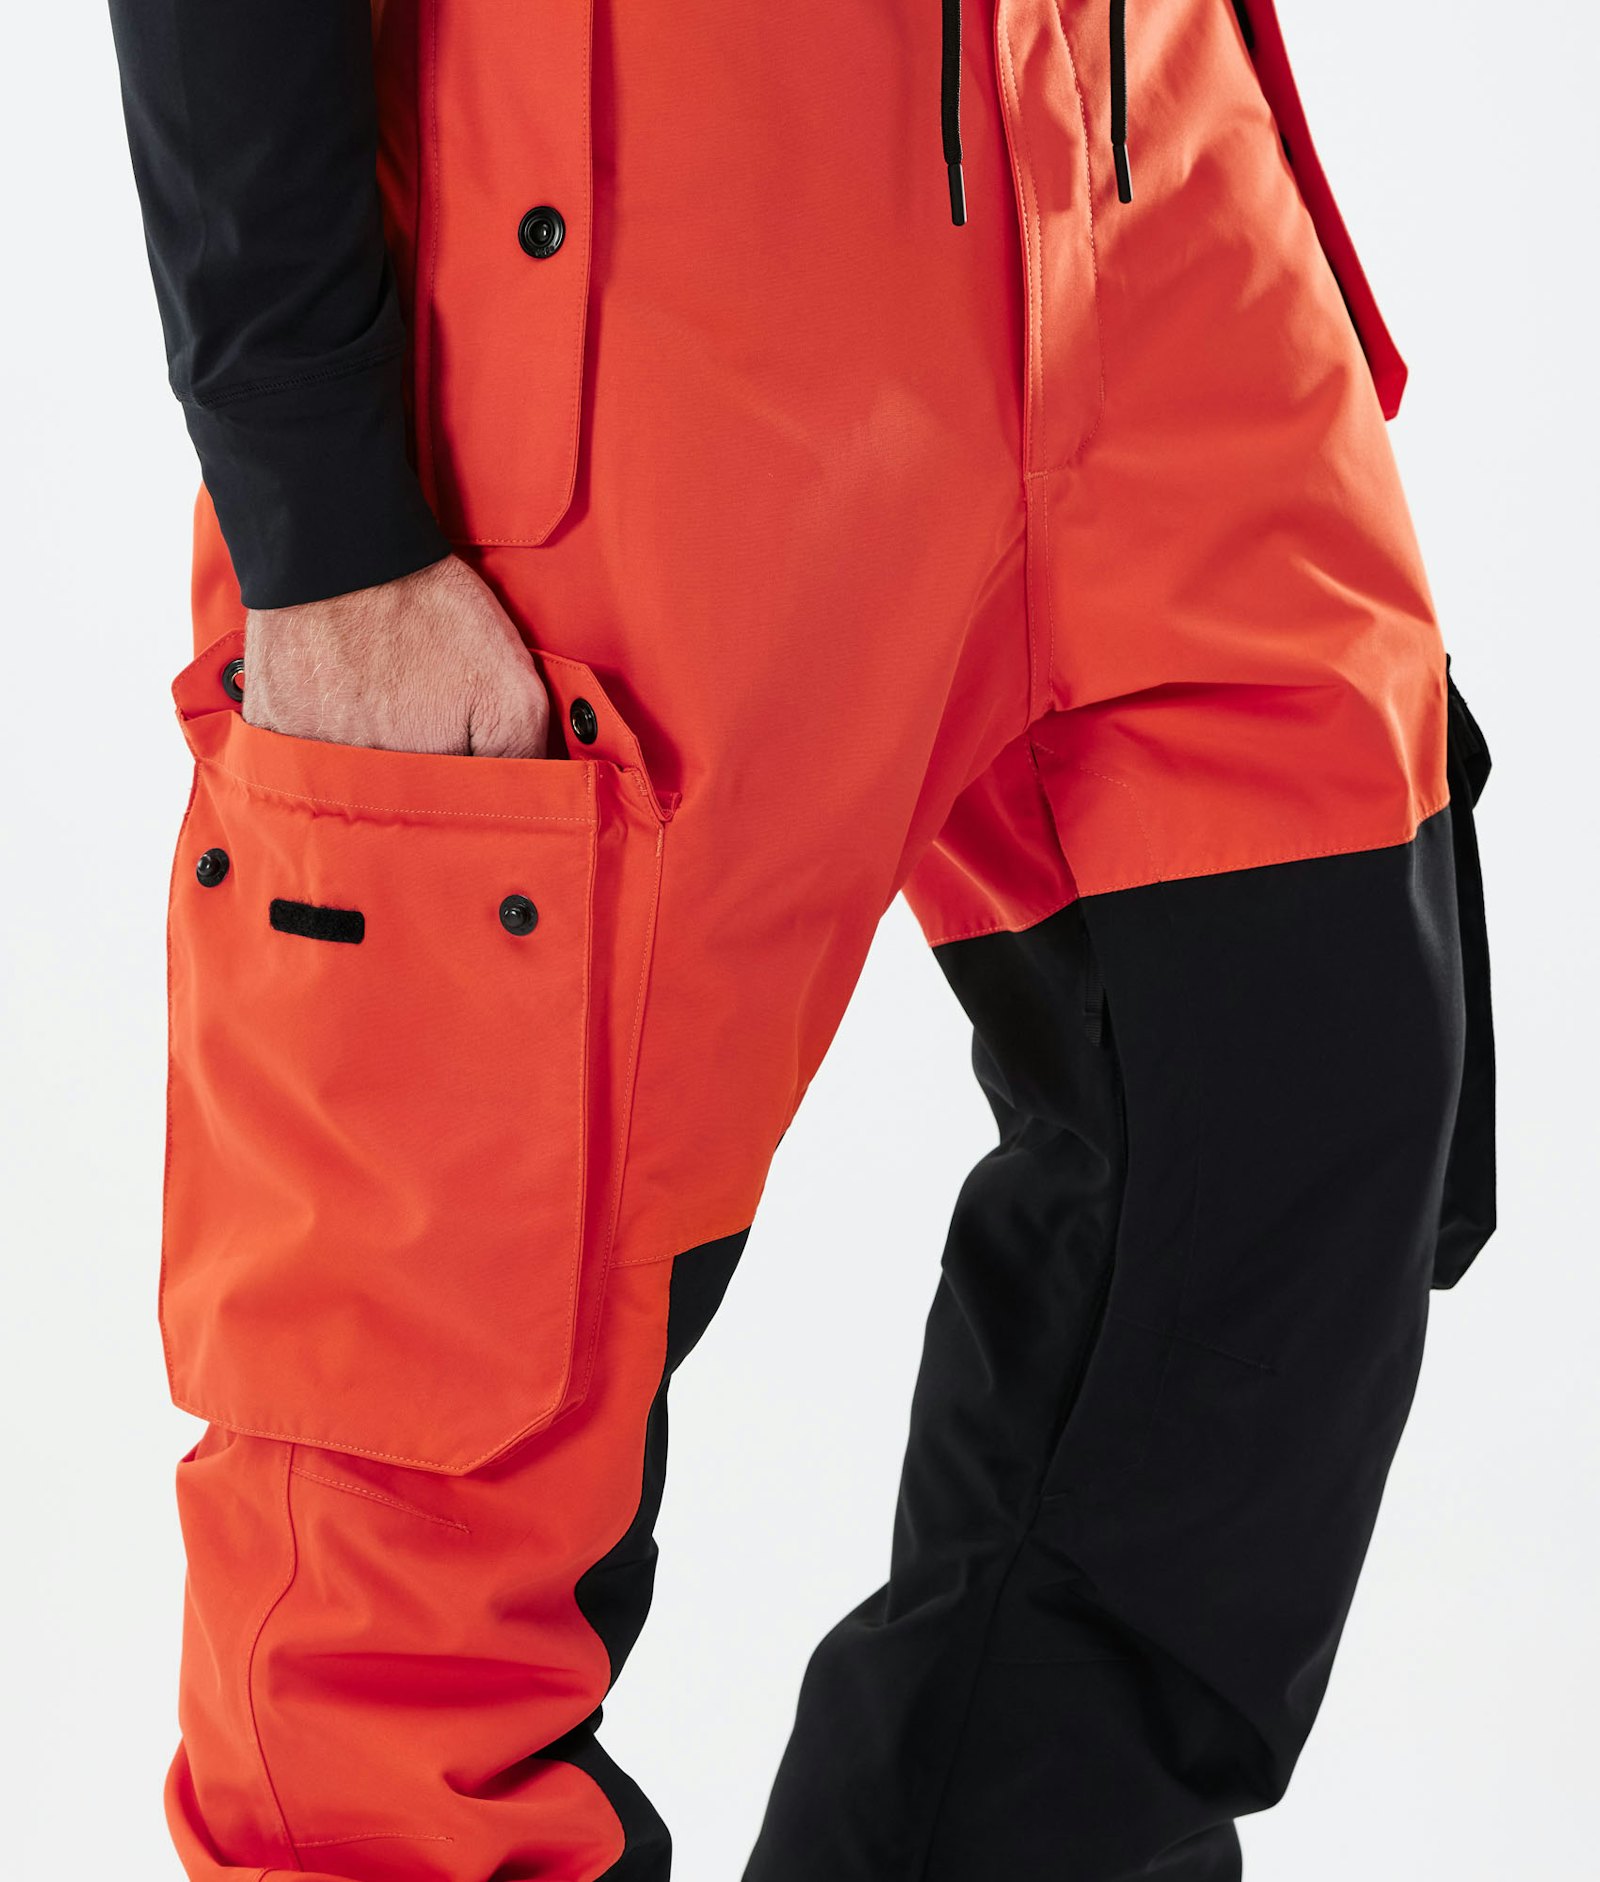 Adept 2021 Snowboard Pants Men Orange/Black